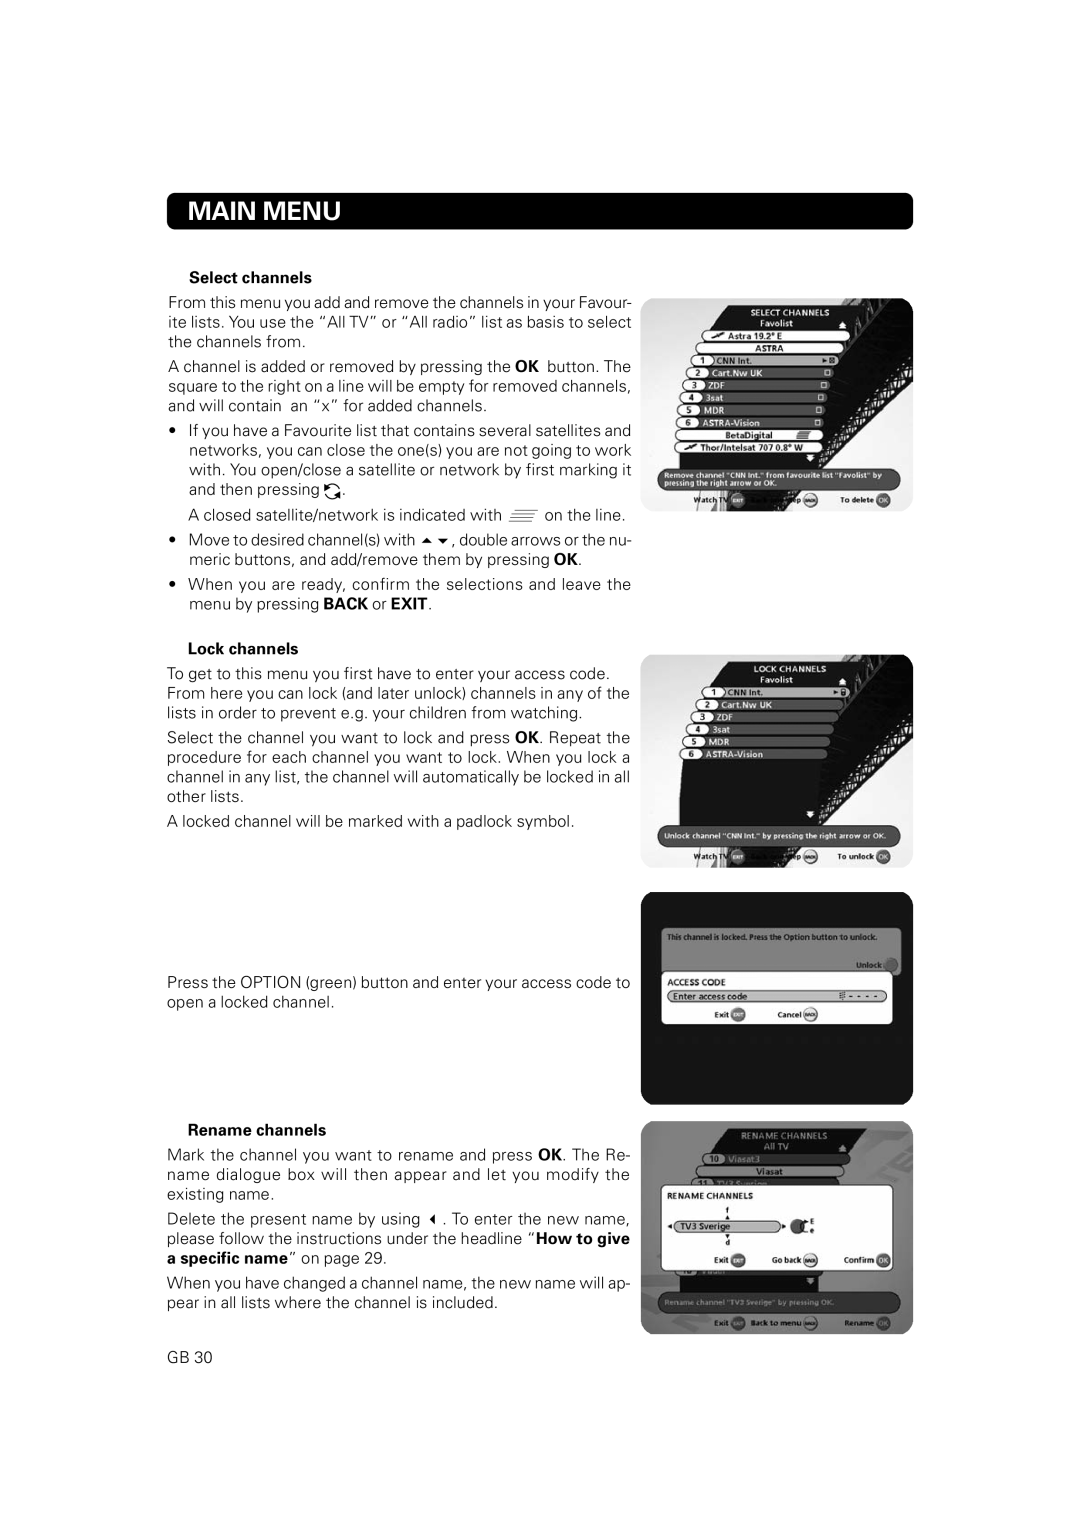 Nokia 9802 S owner manual Main Menu, Select channels, Lock channels, Rename channels 